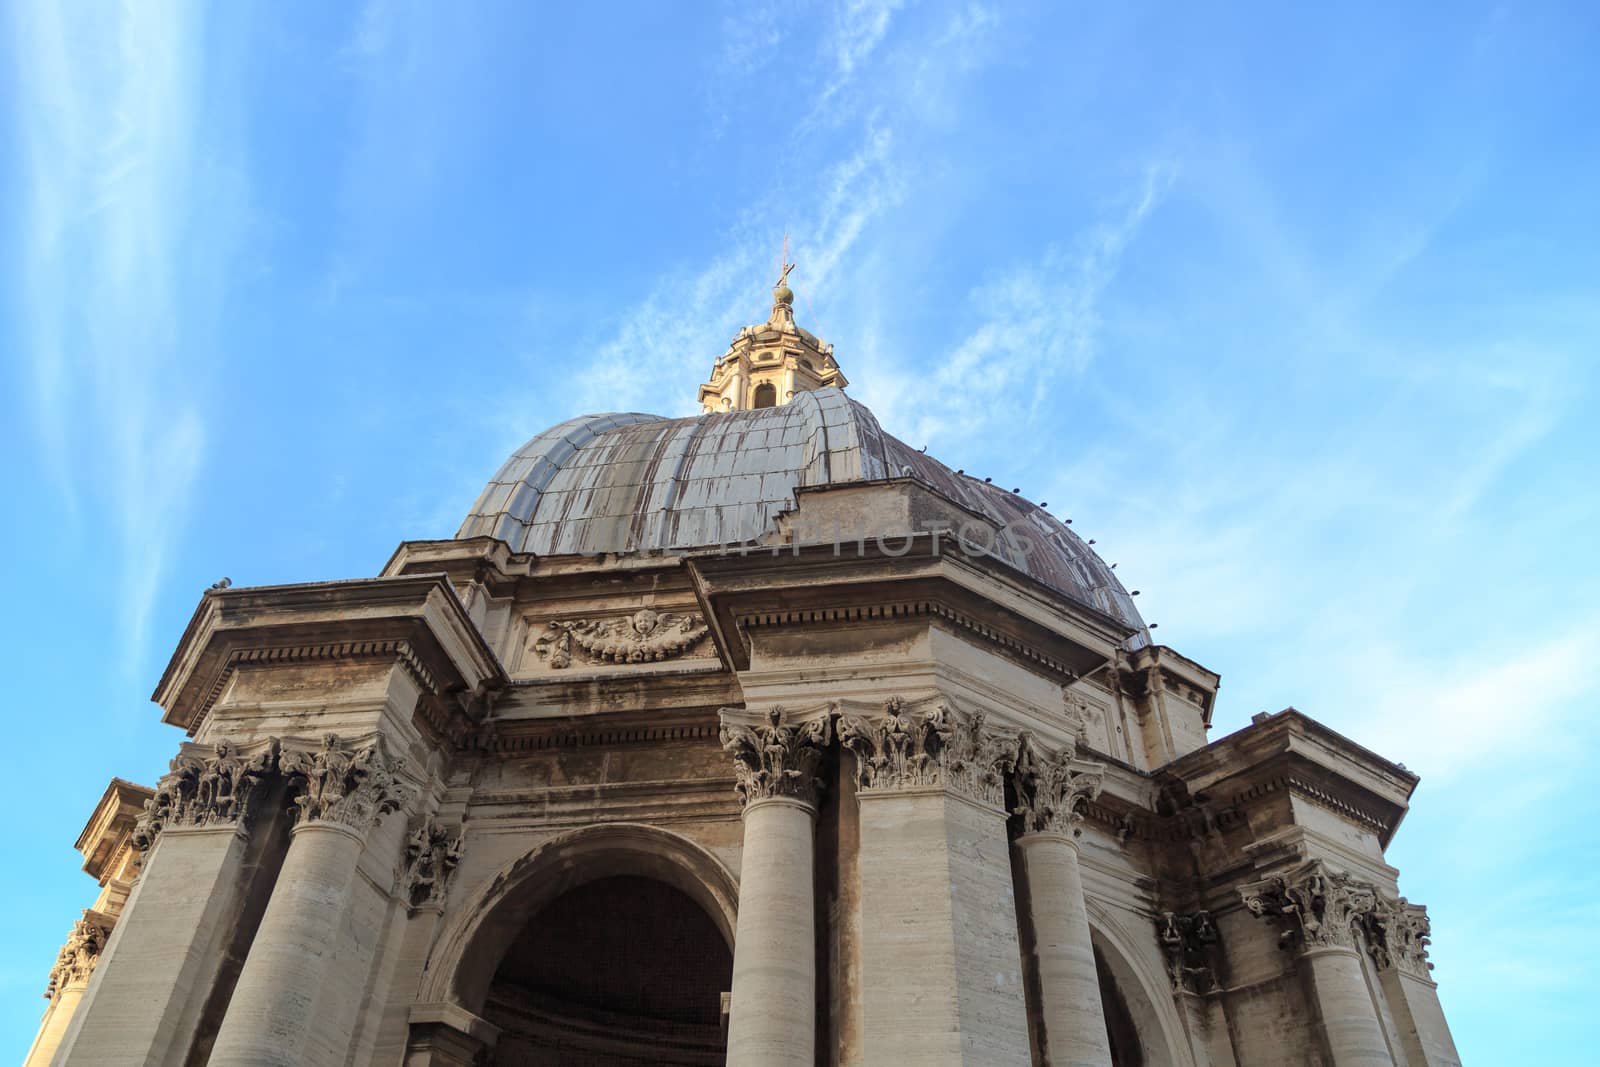 Saint Pietro Basilica Dome by niglaynike